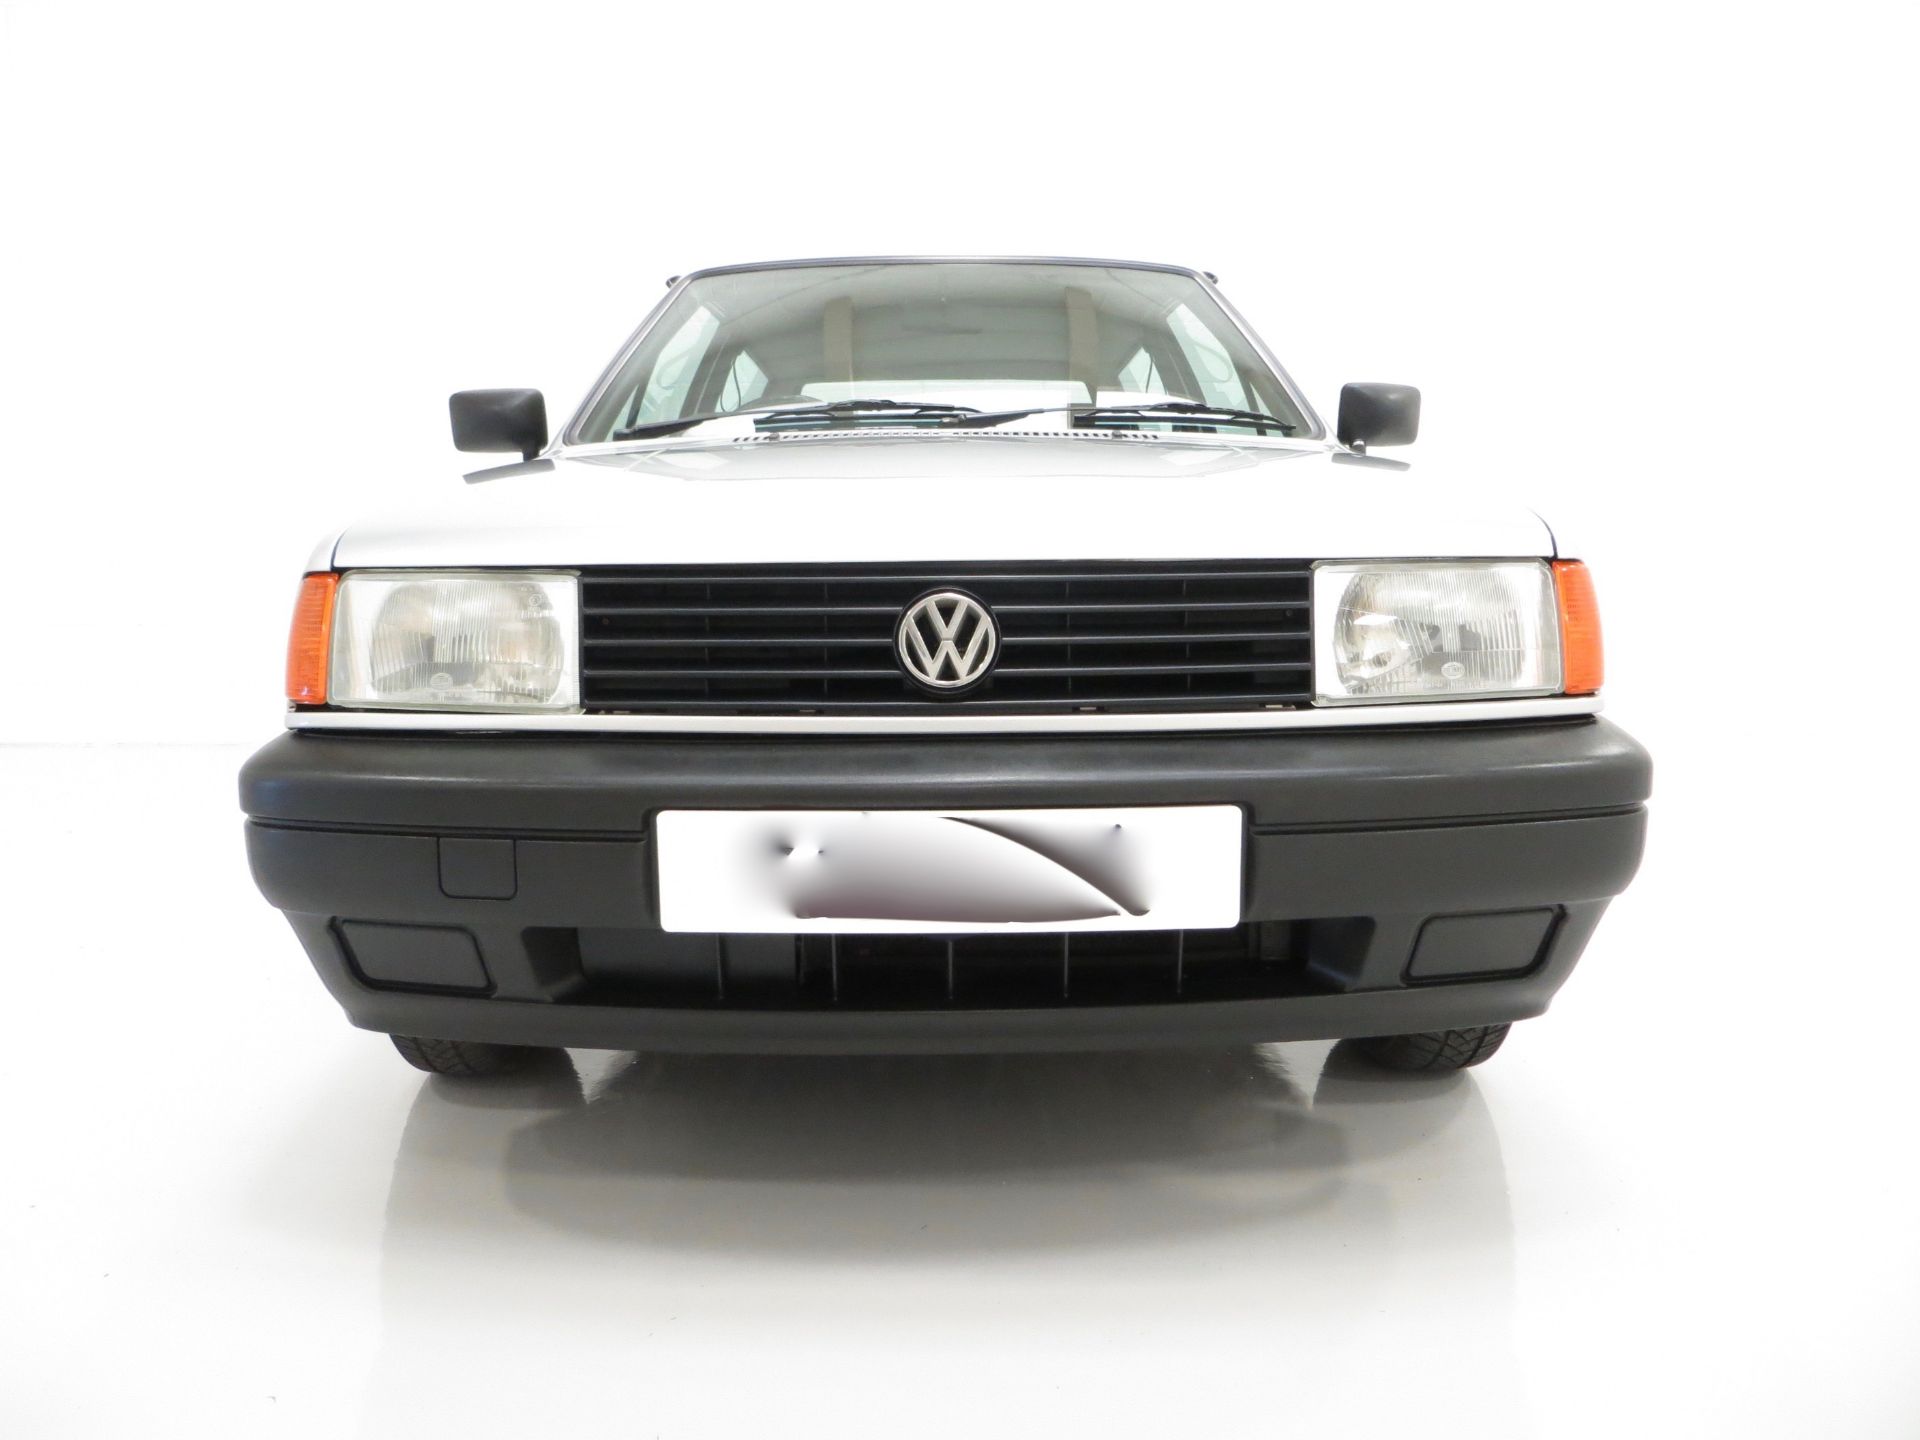 1992 Volkswagen Polo Mk2F Genesis - Image 86 of 86